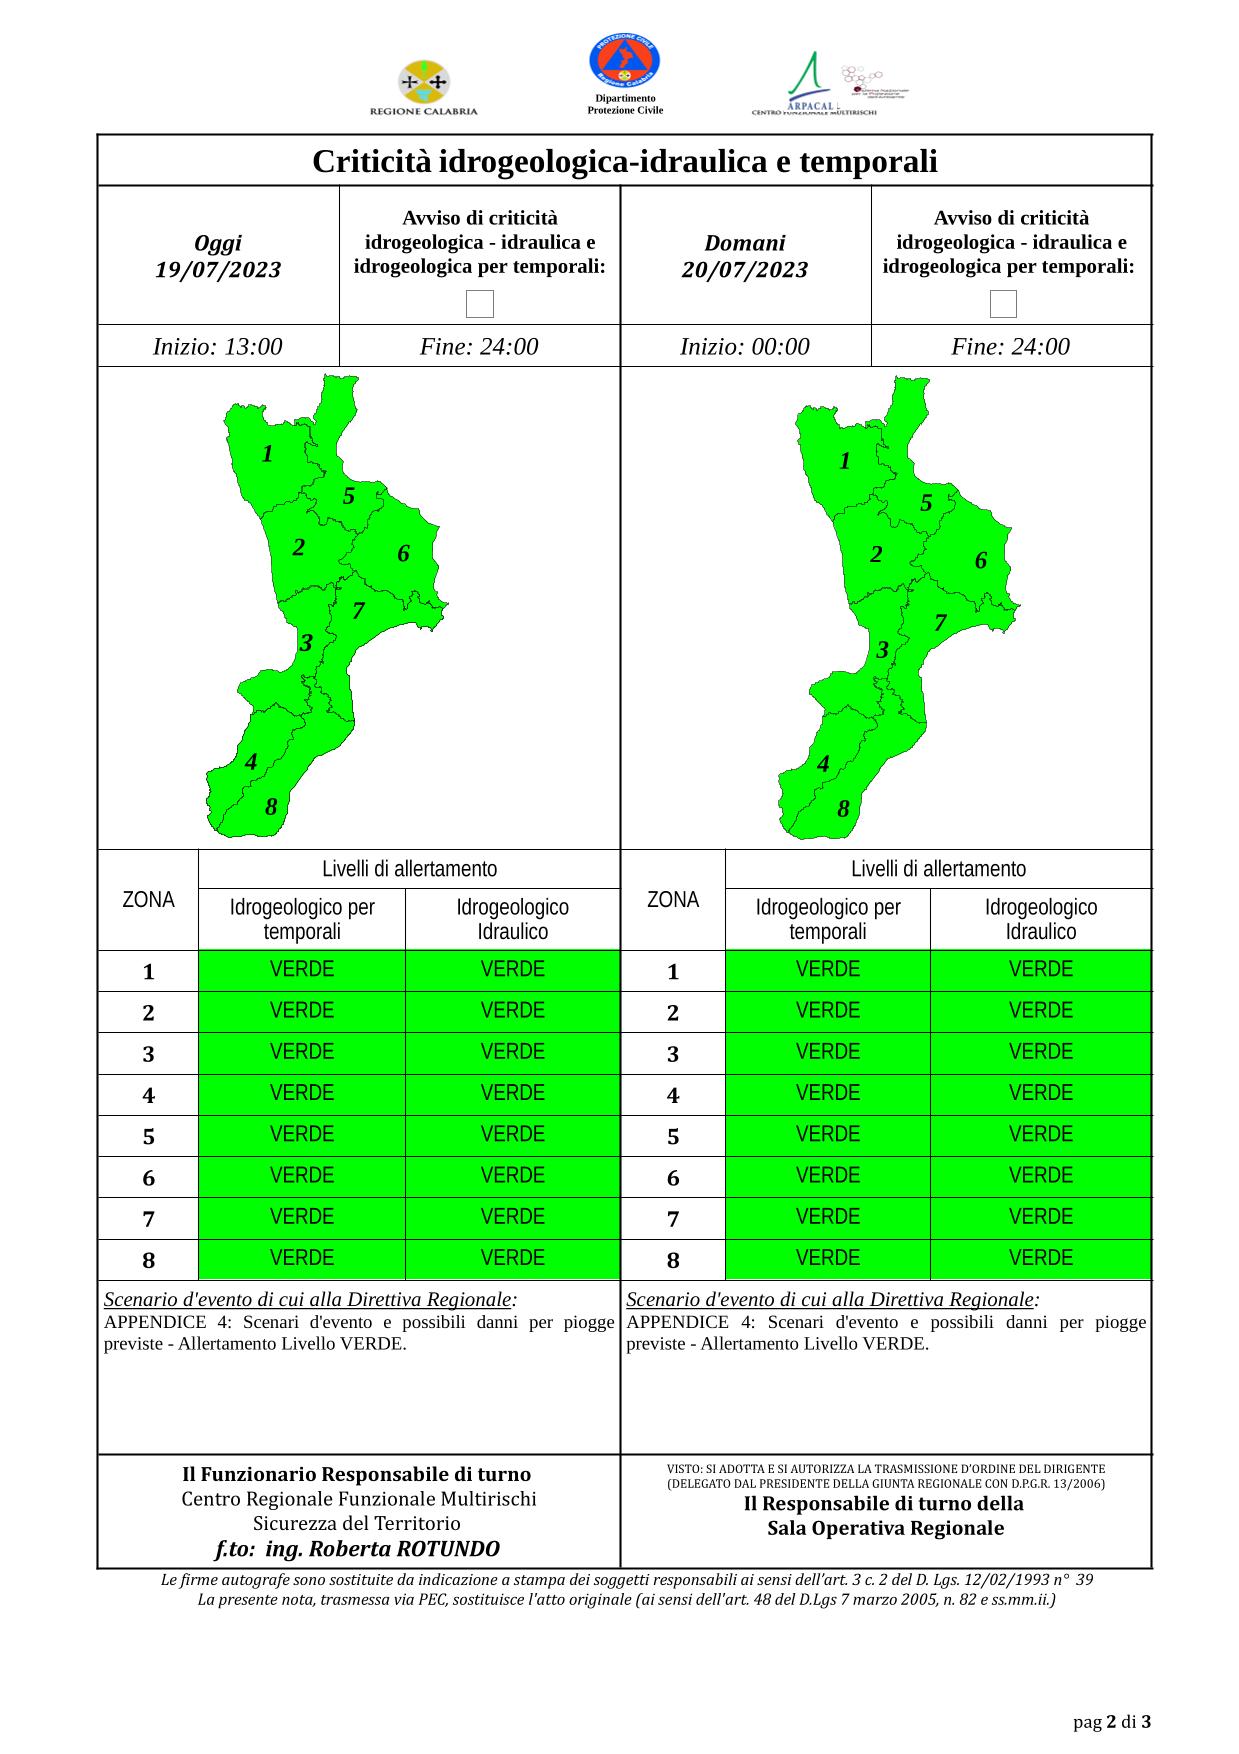 Criticità idrogeologica-idraulica e temporali in Calabria 19-07-2023